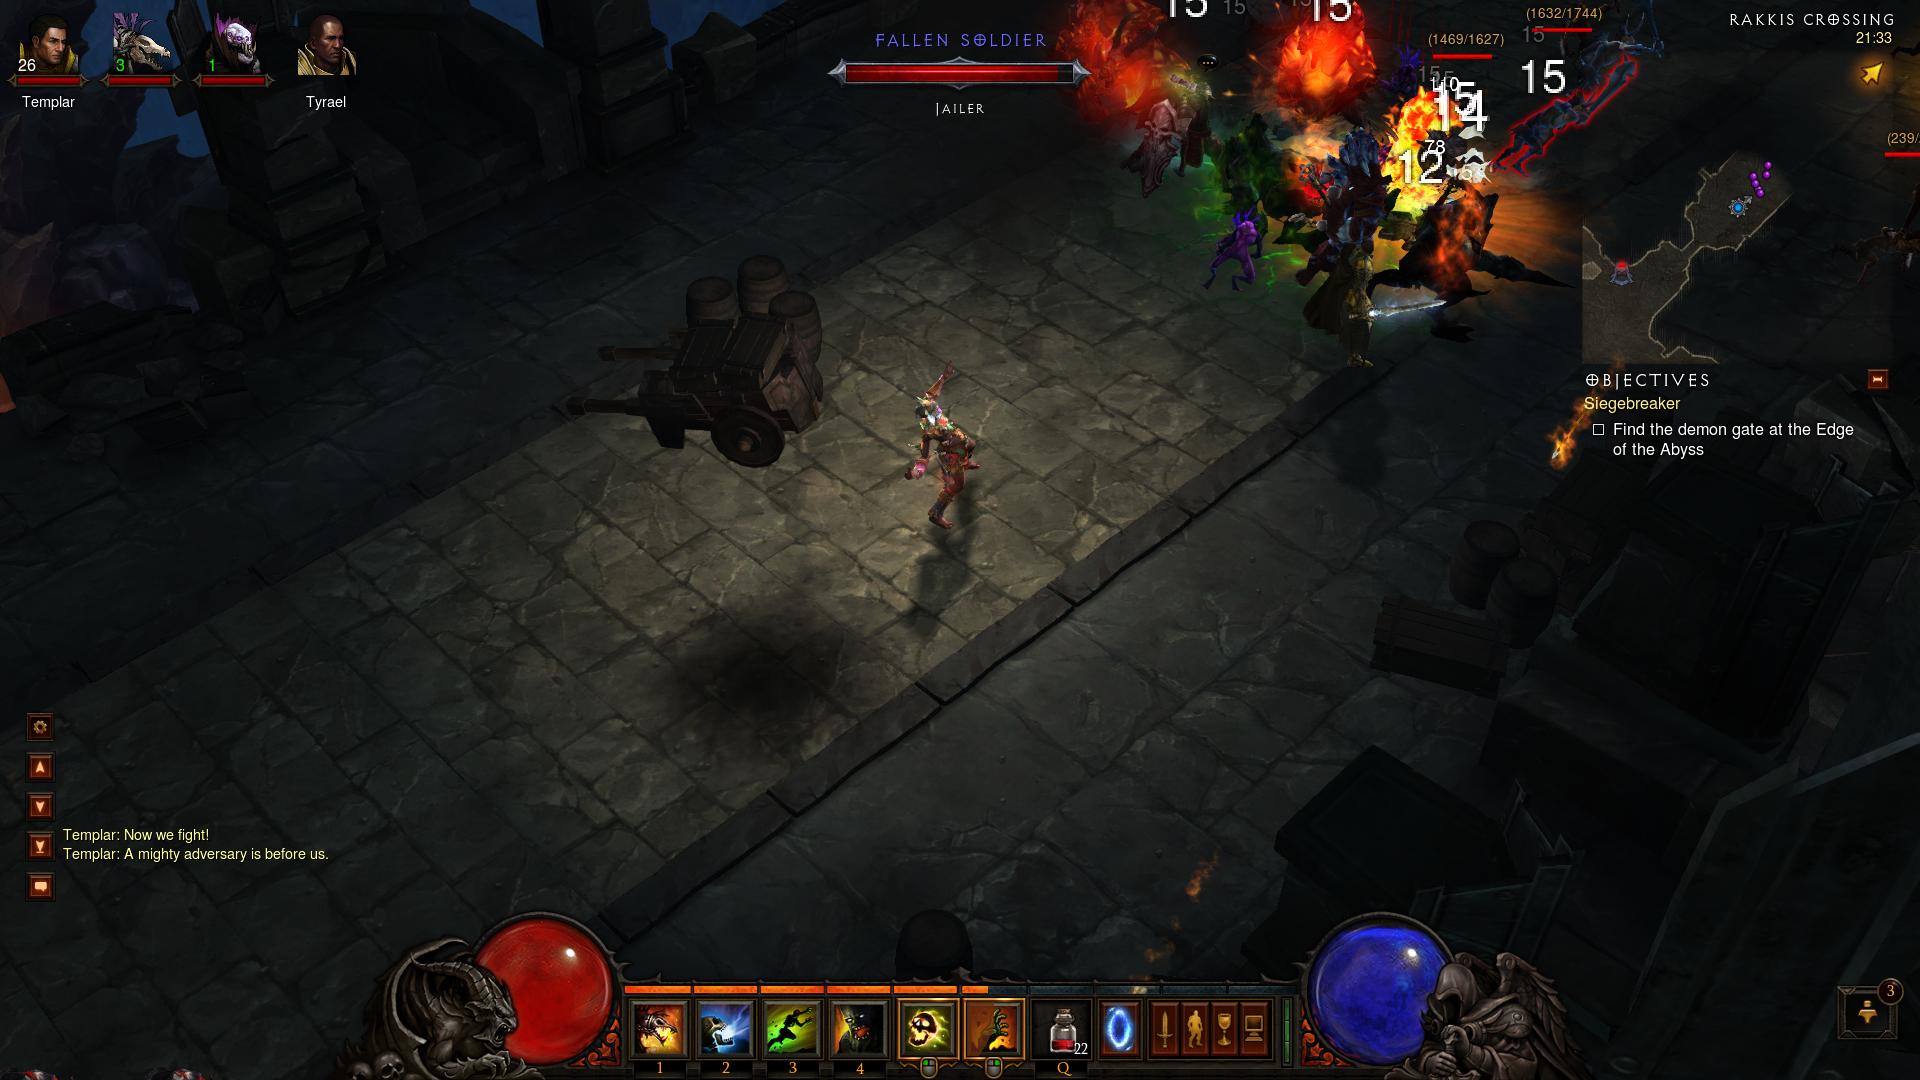 Diablo 3 Fallen Soldier d3 screenshot